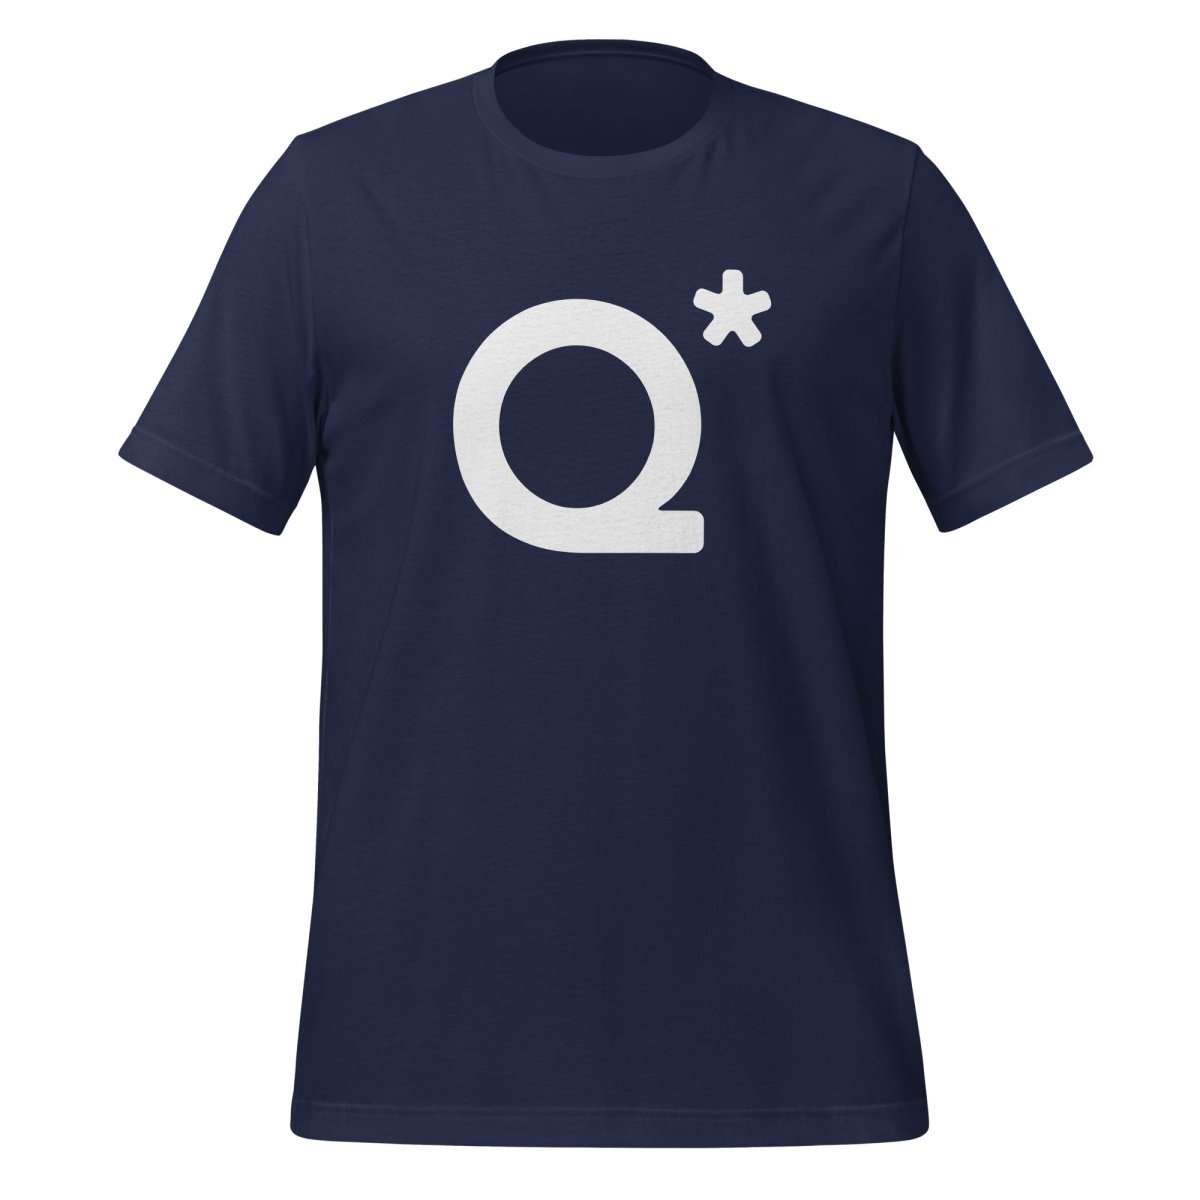 Q* (Q - Star) T - Shirt 1 (unisex) - Navy - AI Store